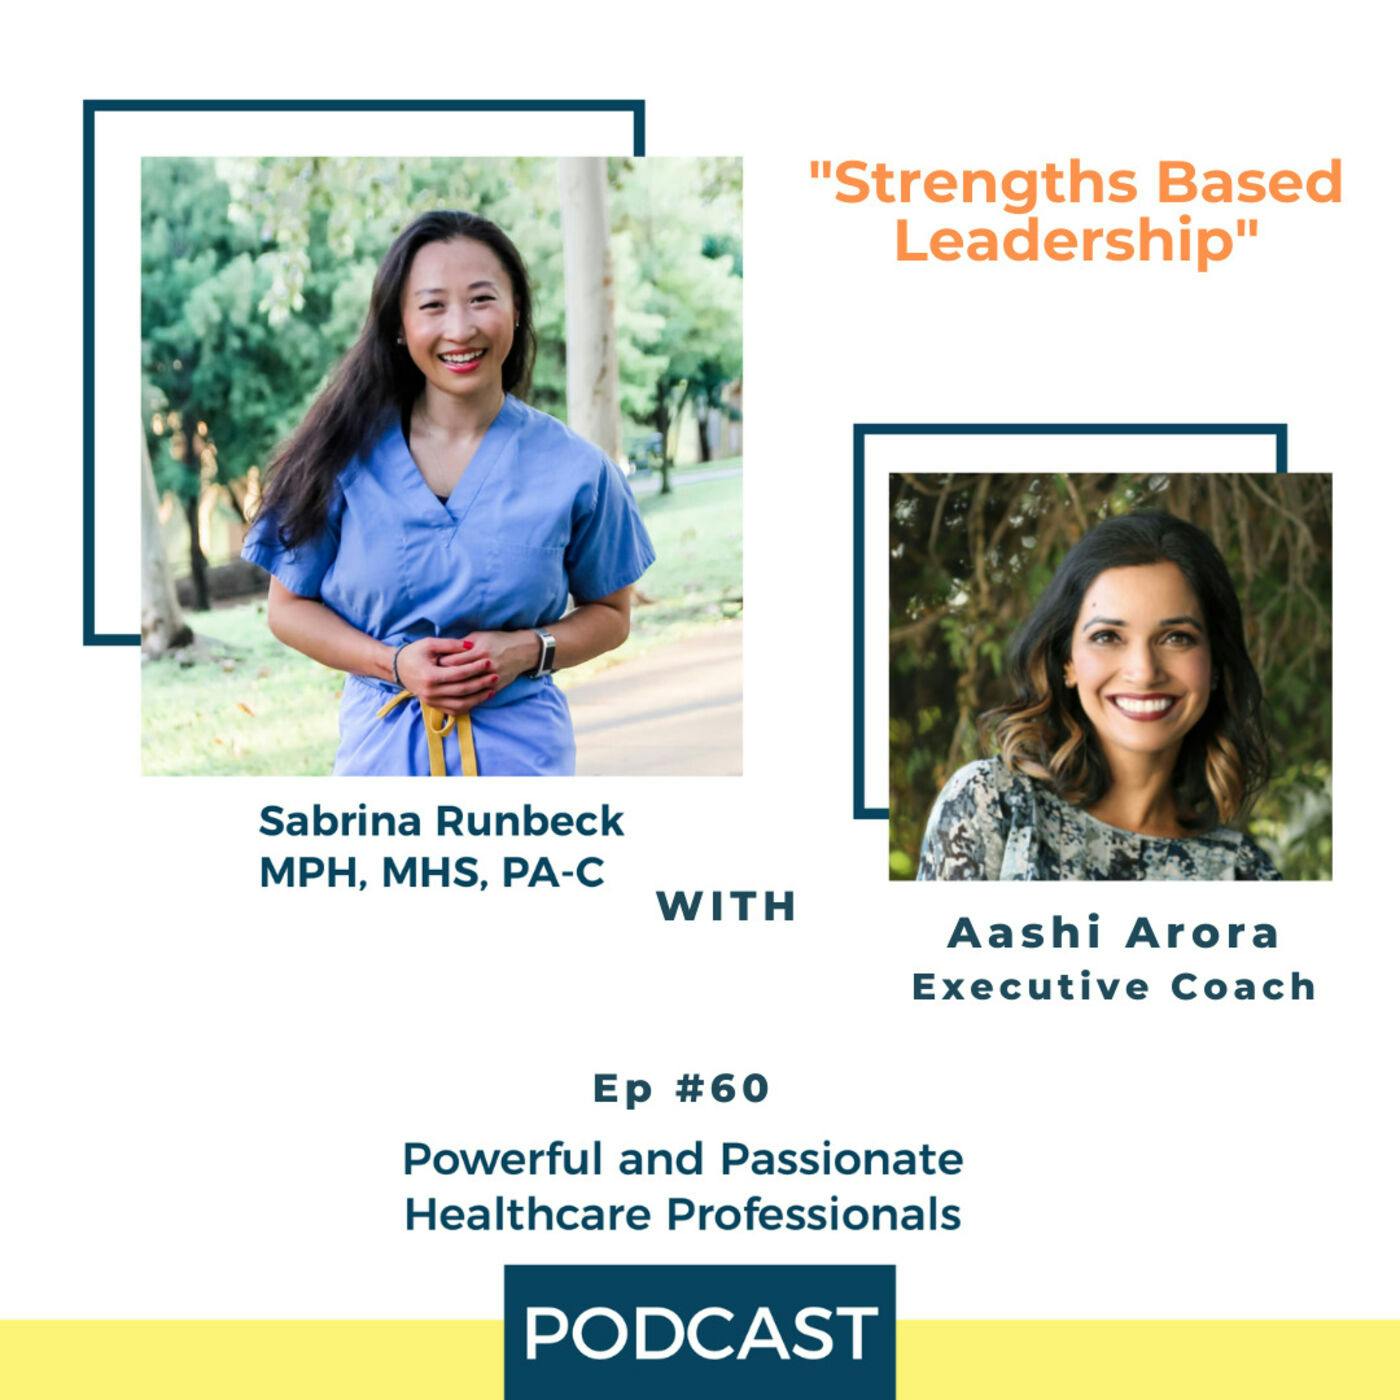 Ep 60 – Strengths Based Leadership with Aashi Arora